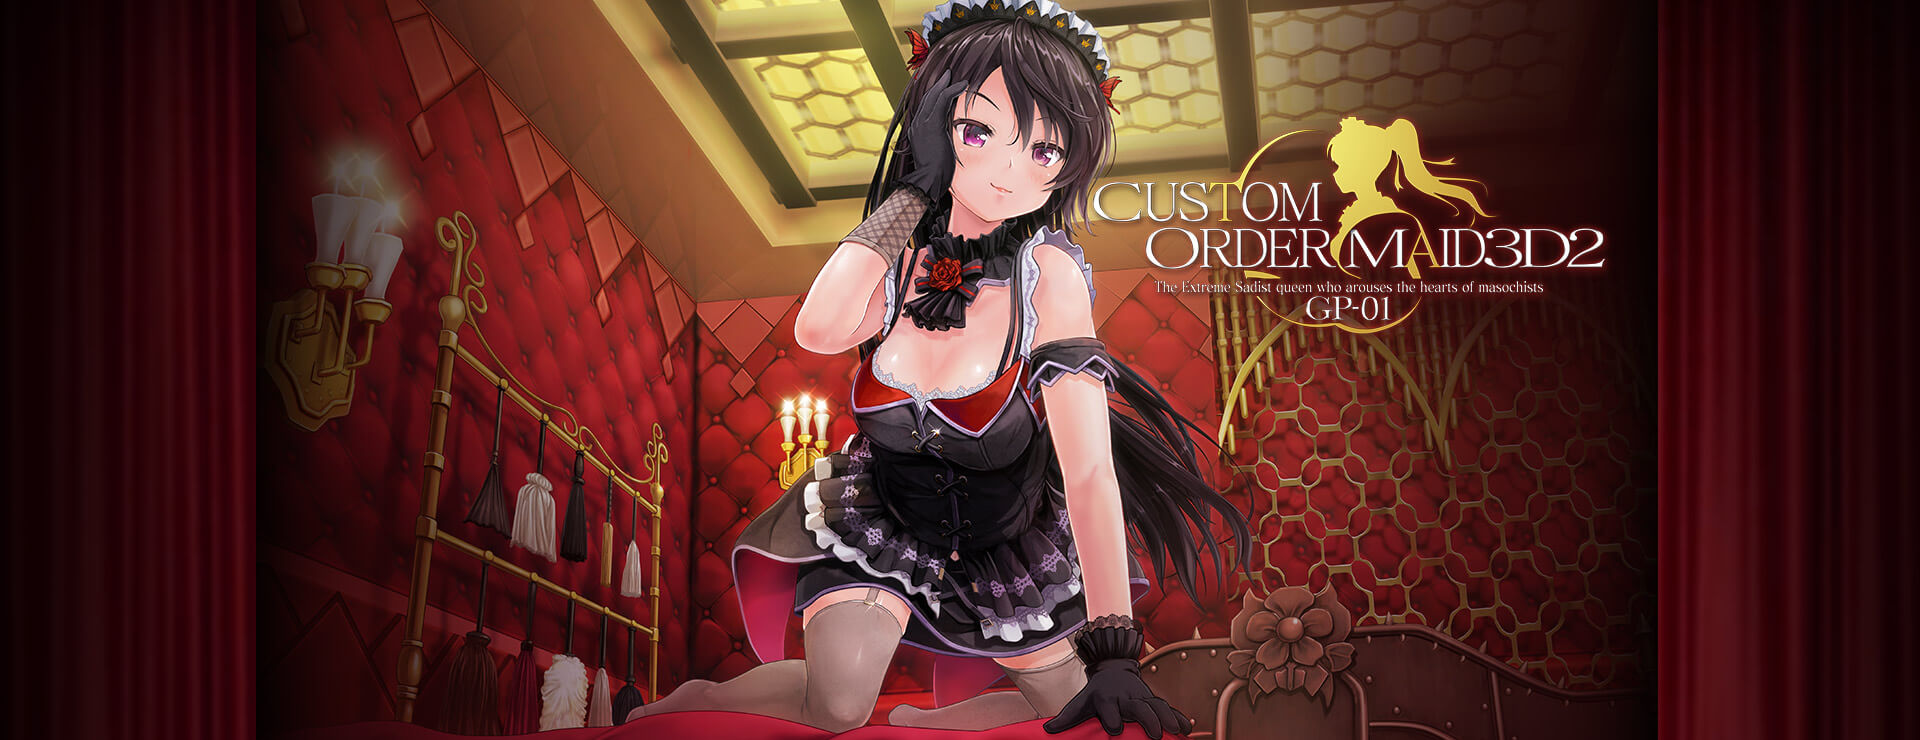 Custom Order Maid 3D2: Extreme Sadist Queen GP01 DLC - Simulation Spiel